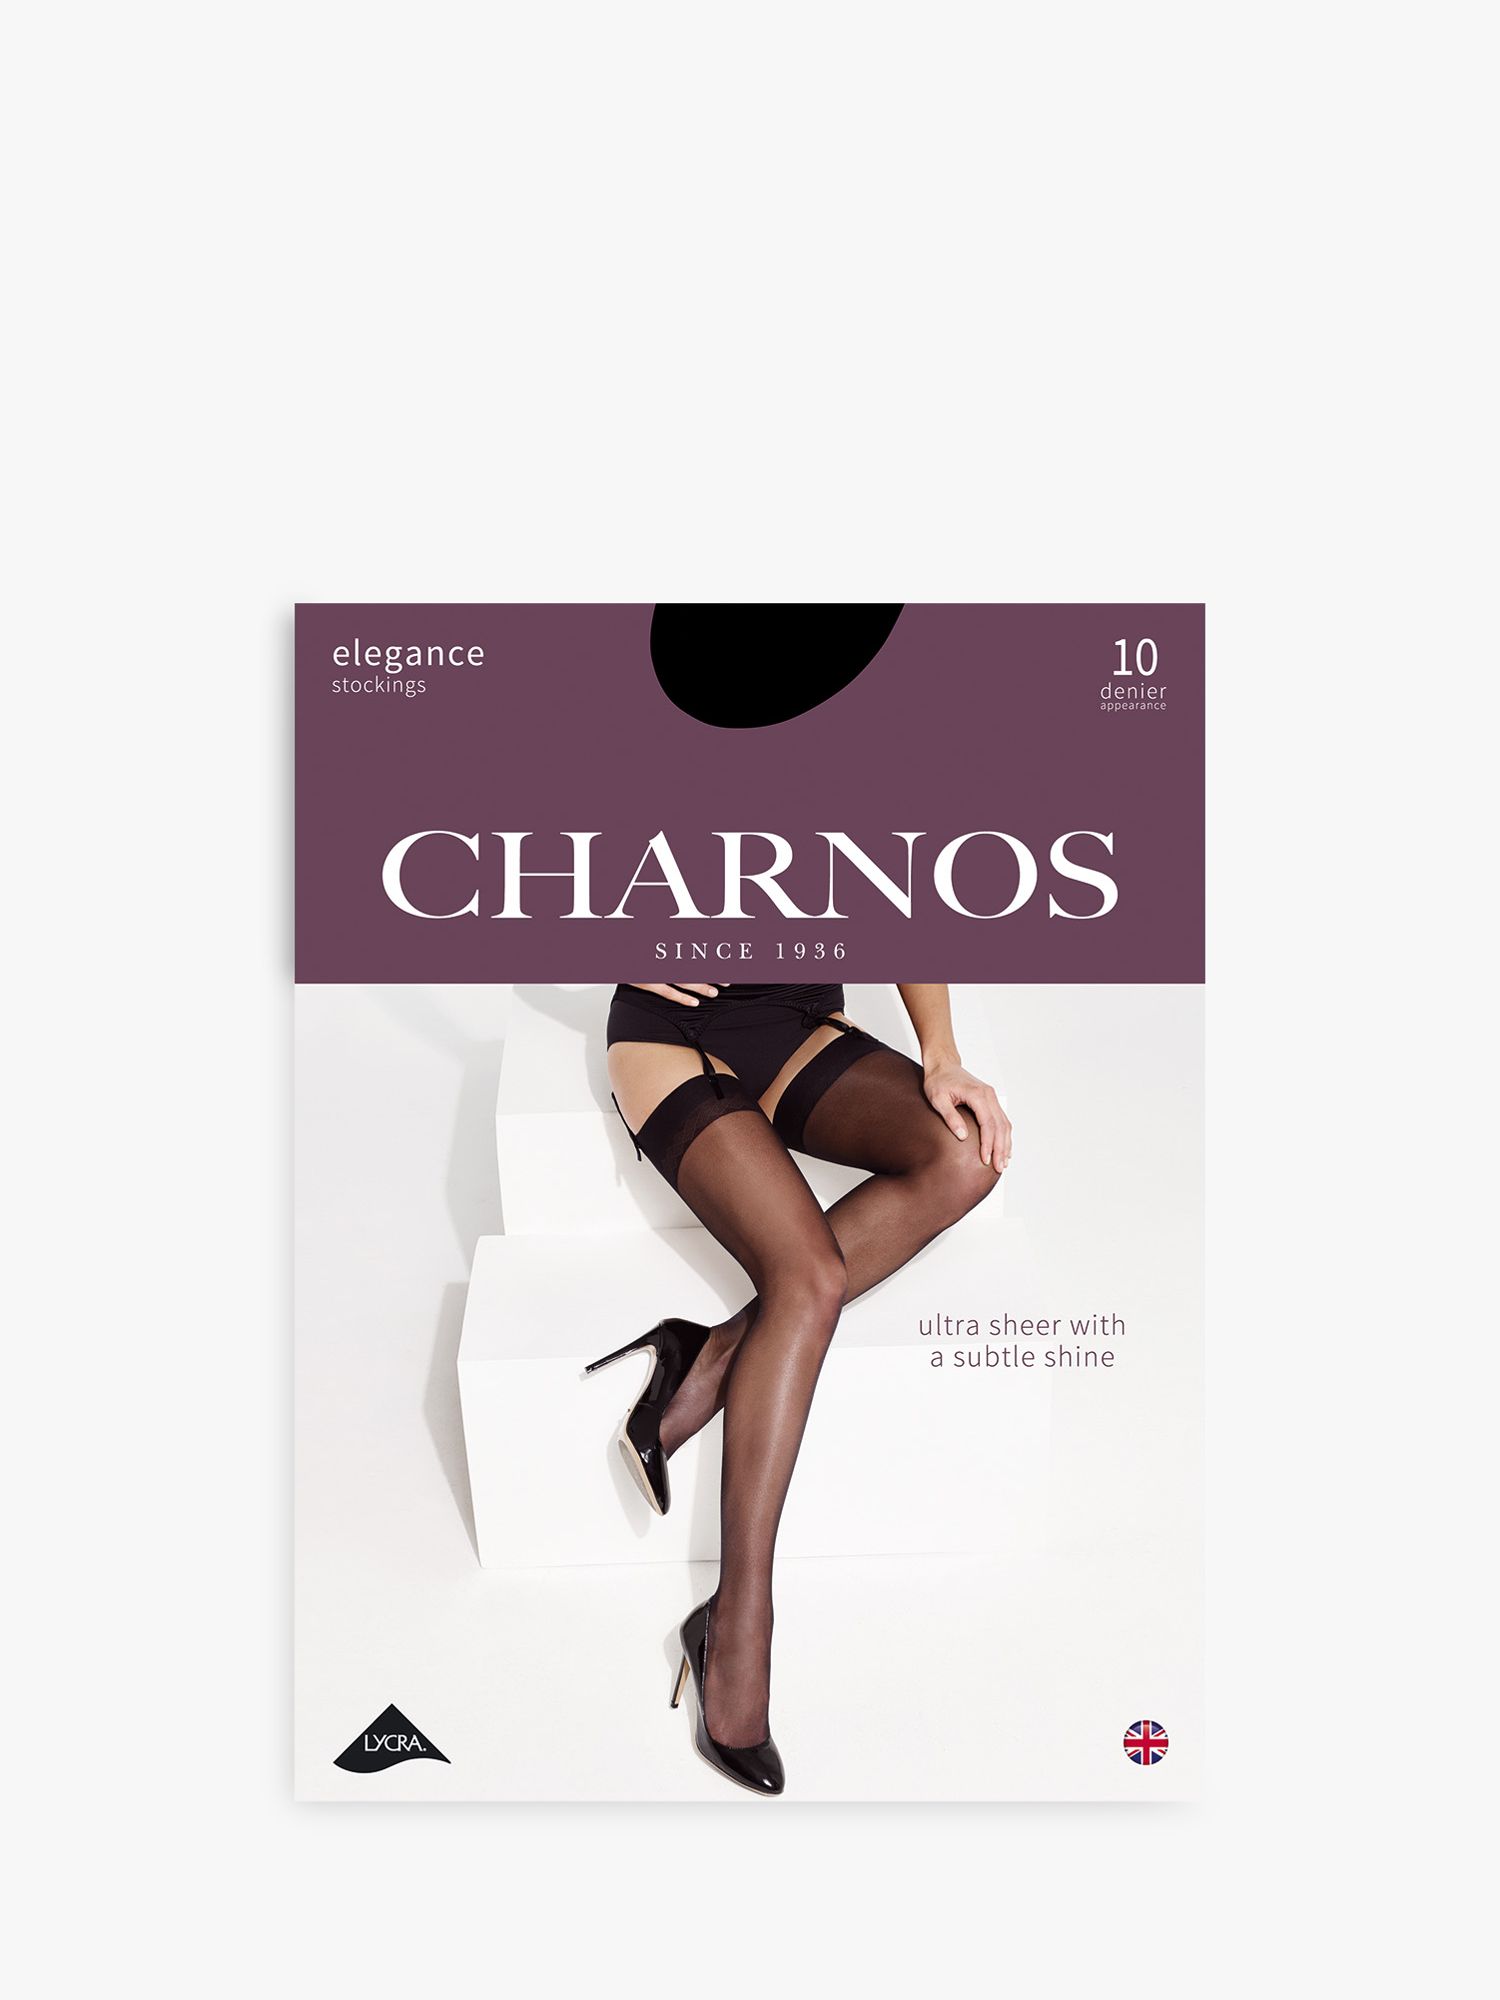 Buy Charnos 10 Denier Elegance Stockings Online at johnlewis.com